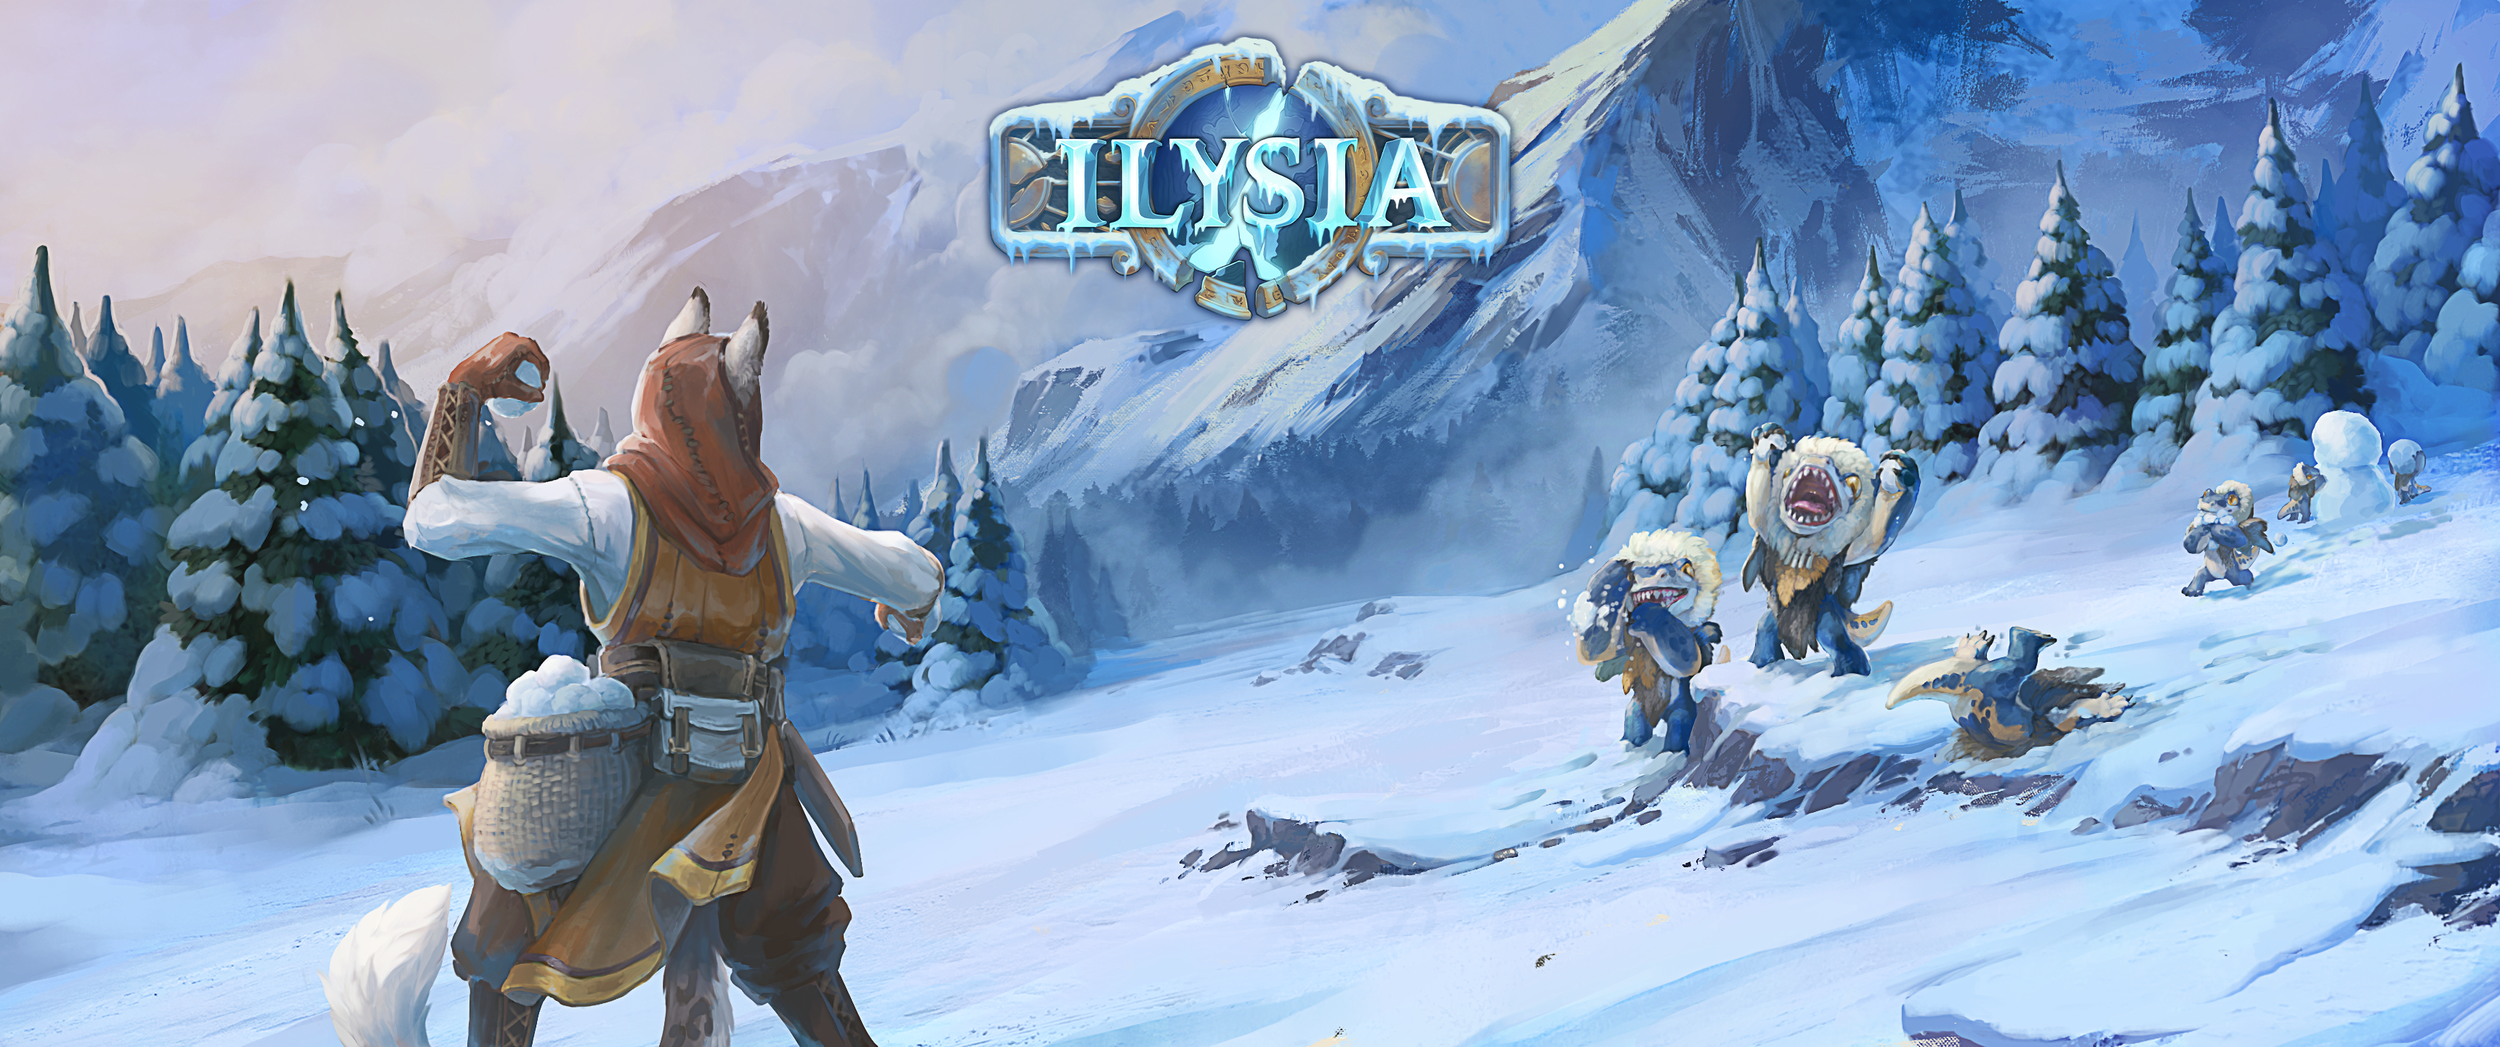 Ilysia-Winter-Wallpaper2 (2).png